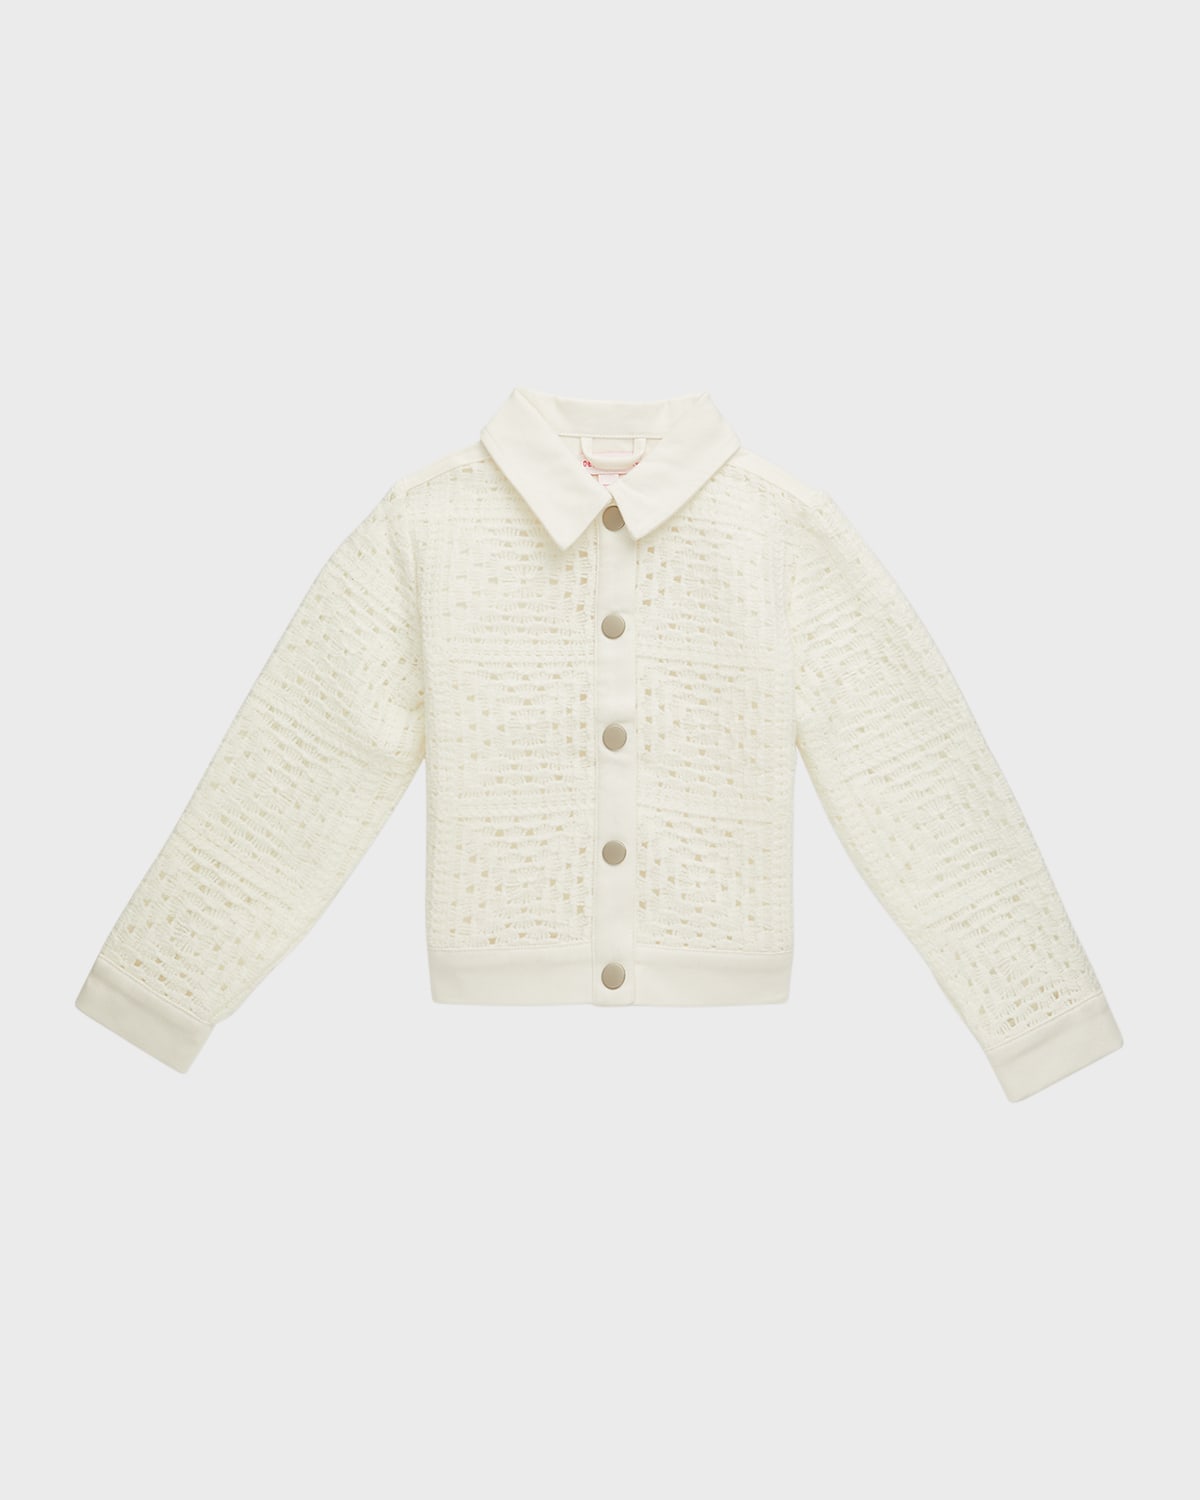 Girl's Crochet Denim Jacket, Size 4-6X